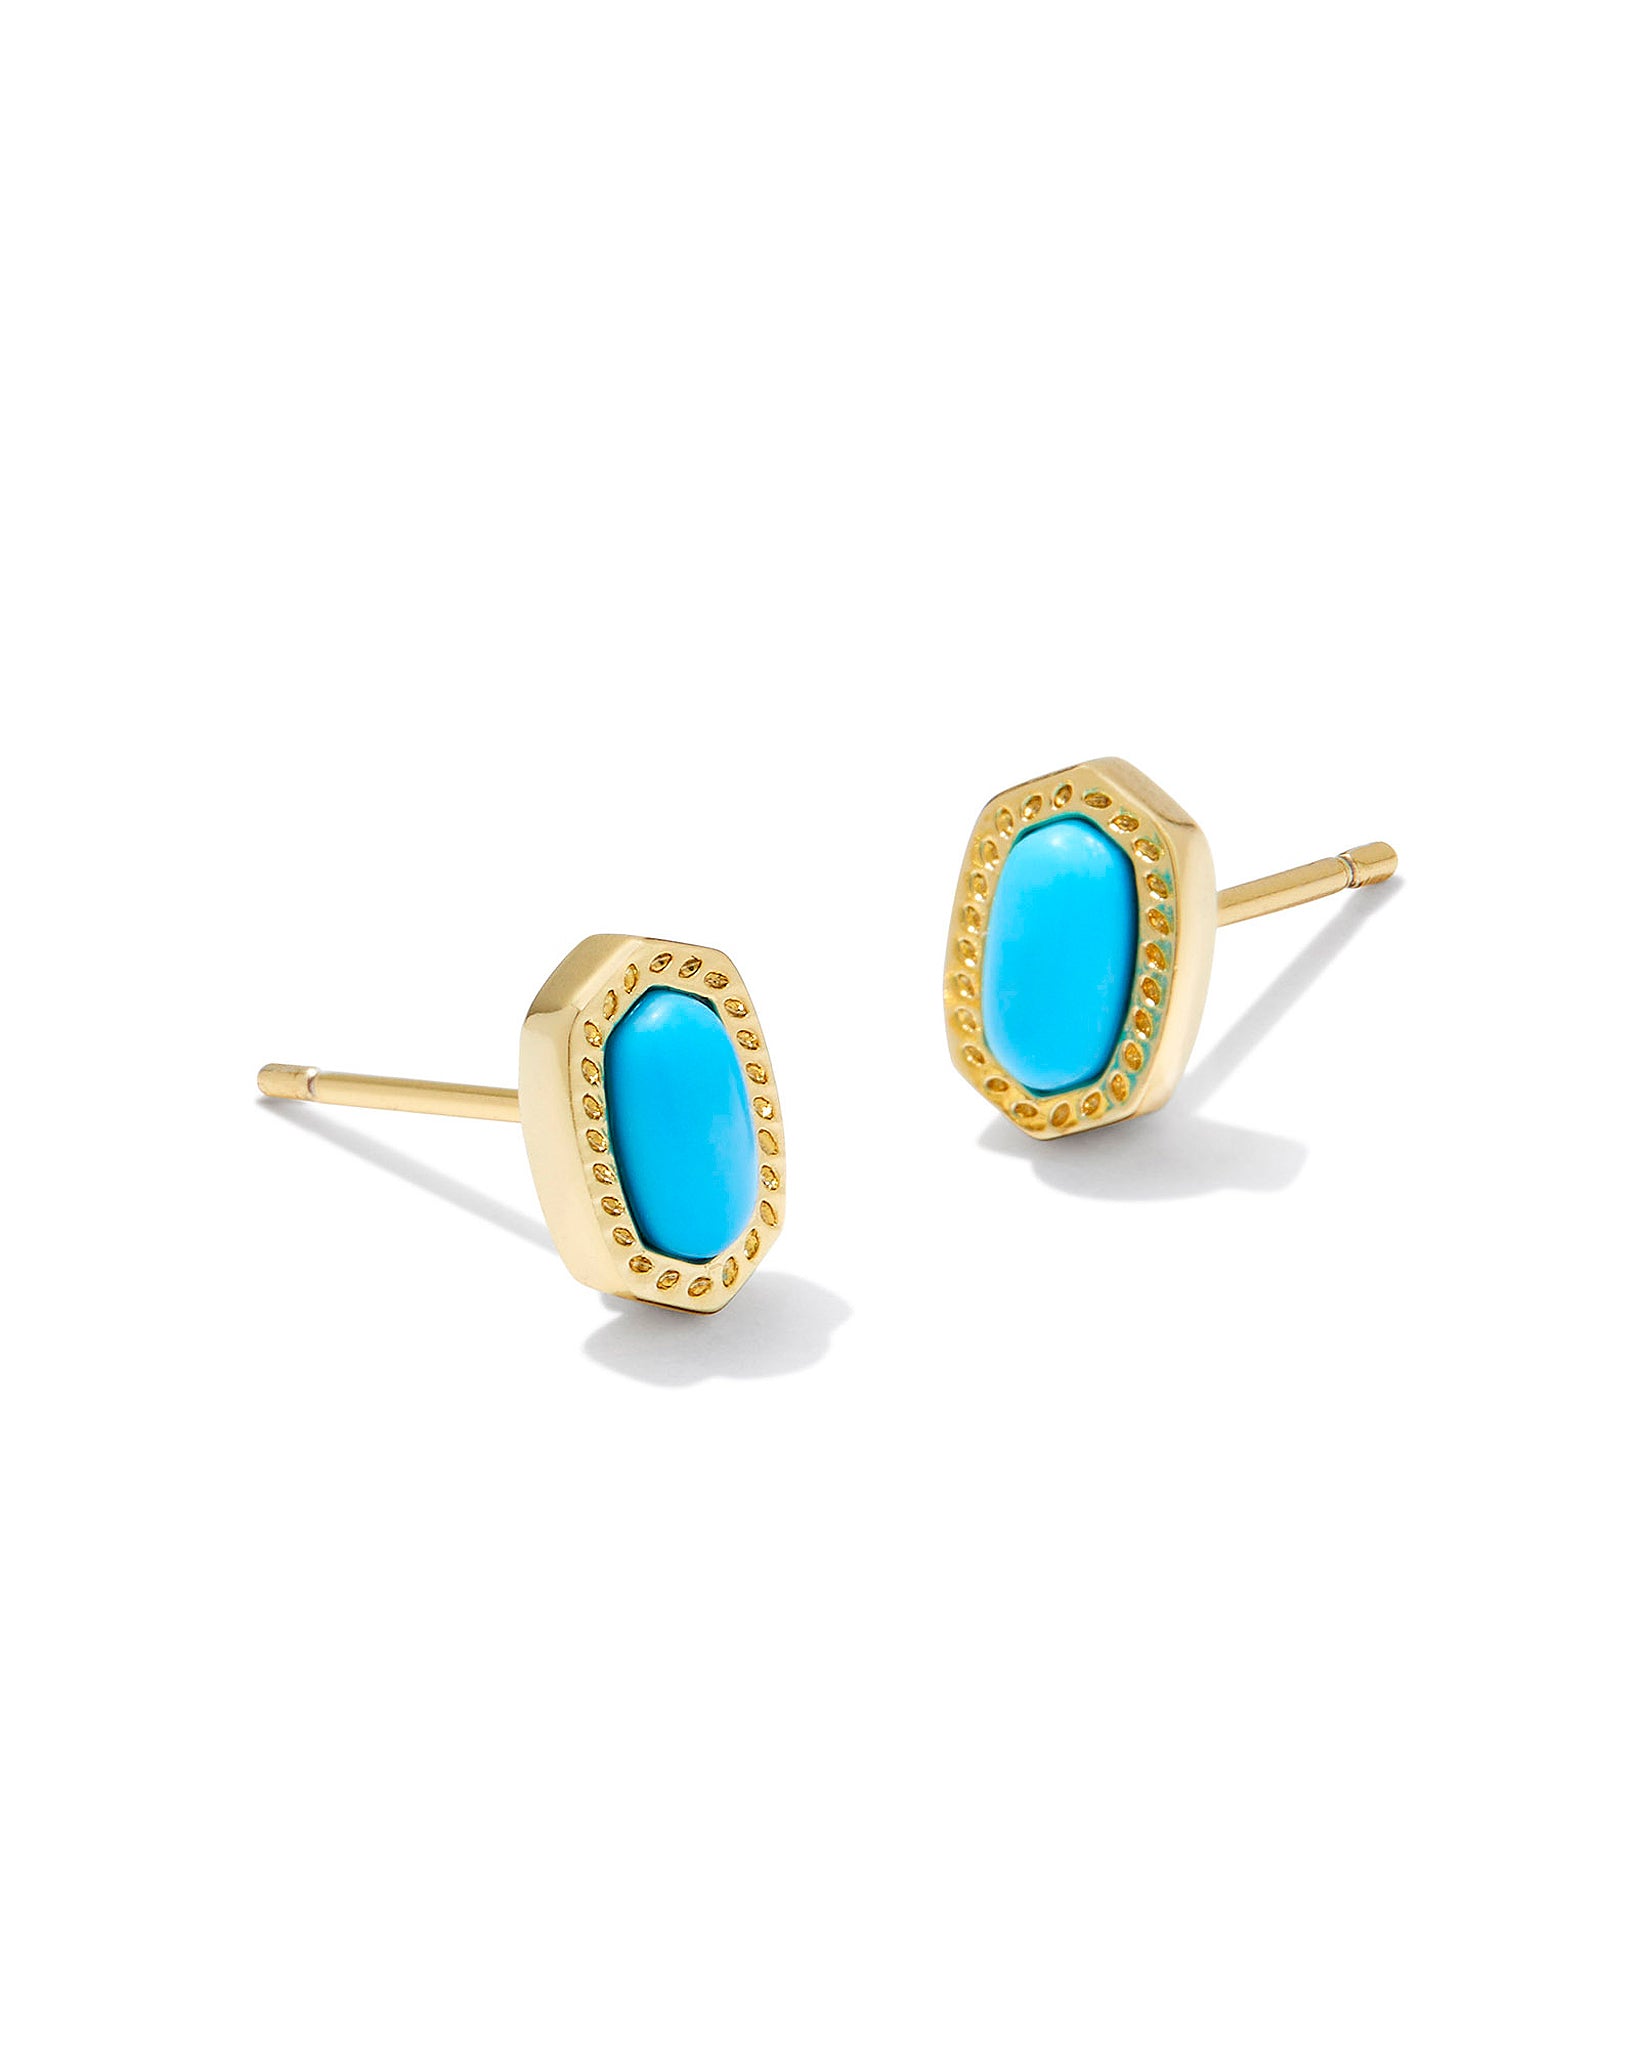 Kendra Scott Mini Ellie Petite Stud Earrings in Turquoise Blue Magnesite and Gold